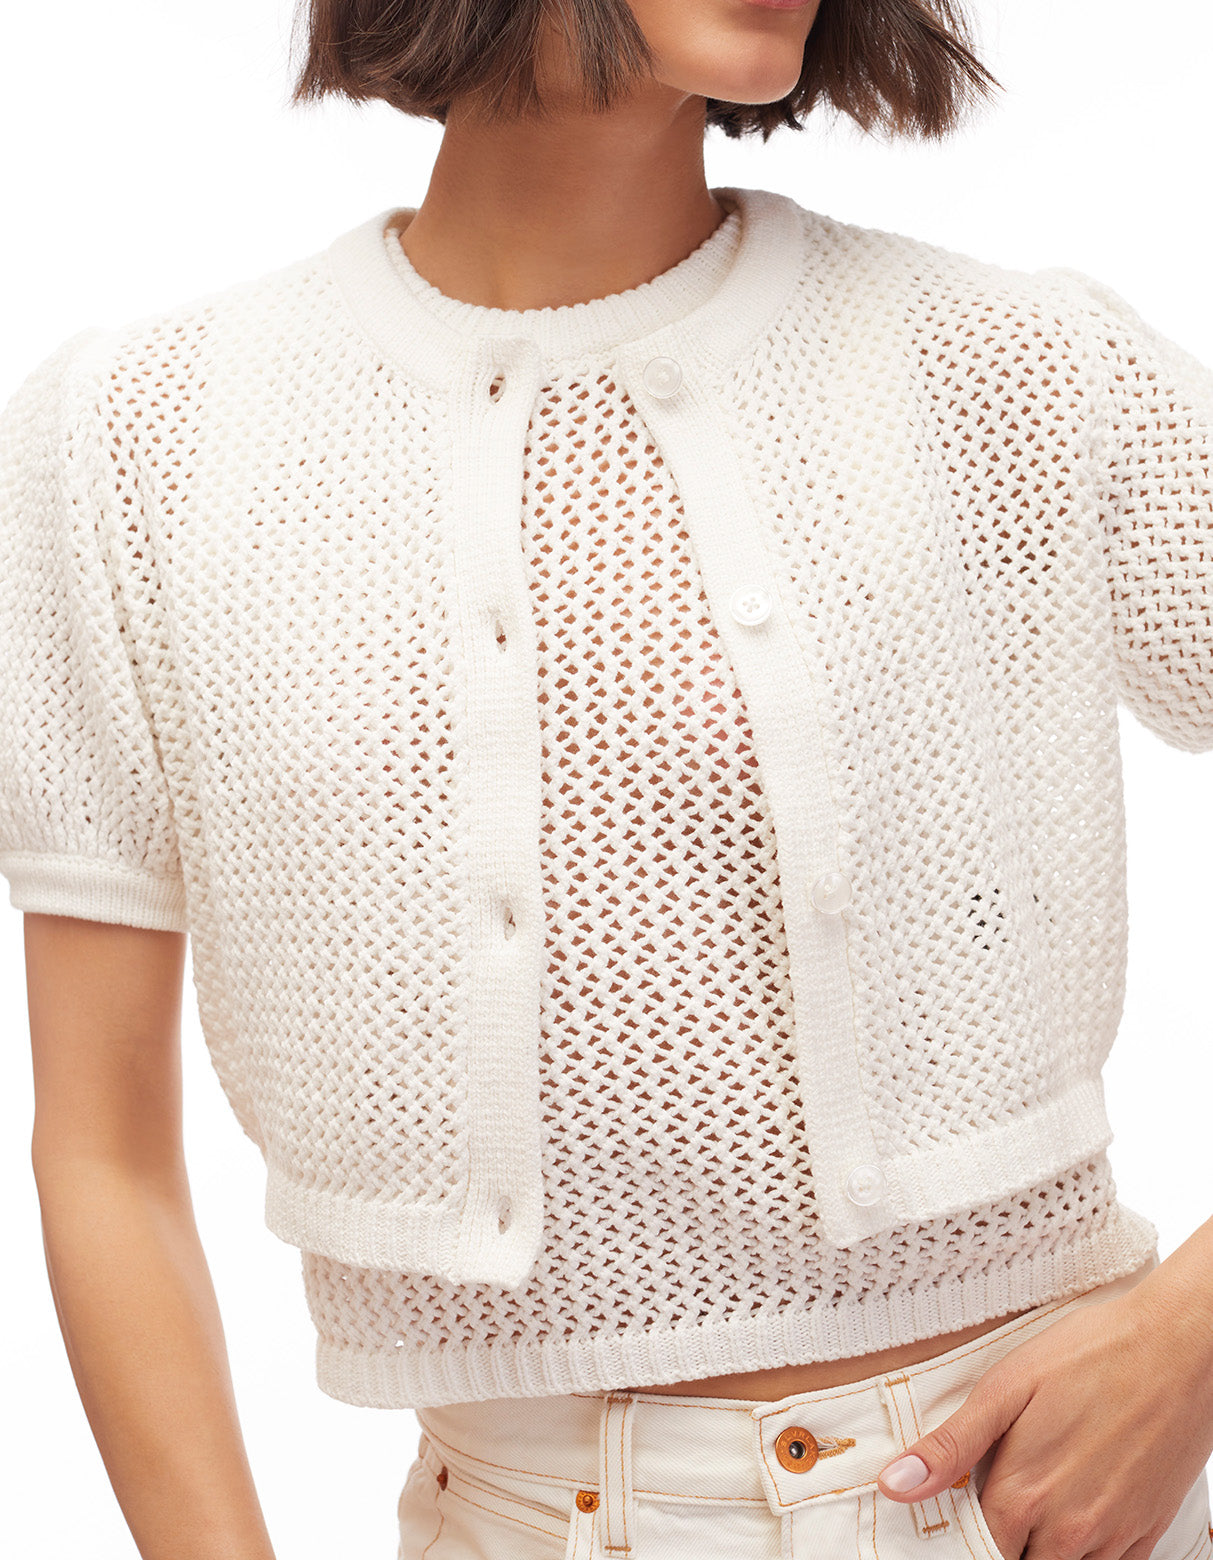 estelle crochet racer tank top optic white - women's flattering cruisewear tops designer fashion by toccin